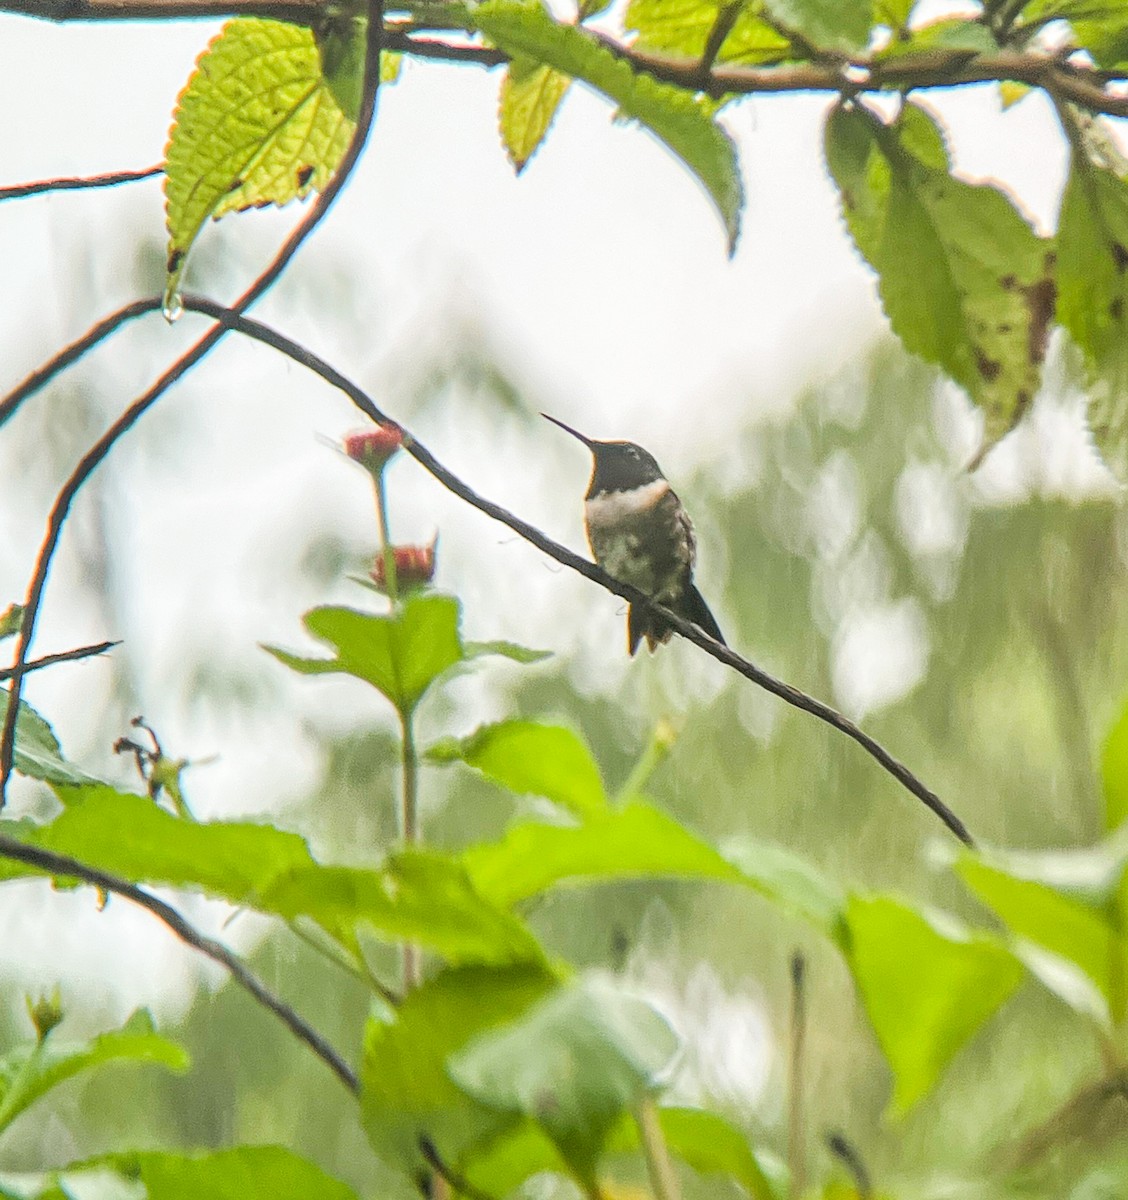 Ruby-throated Hummingbird - Rogers "Caribbean Naturalist" Morales